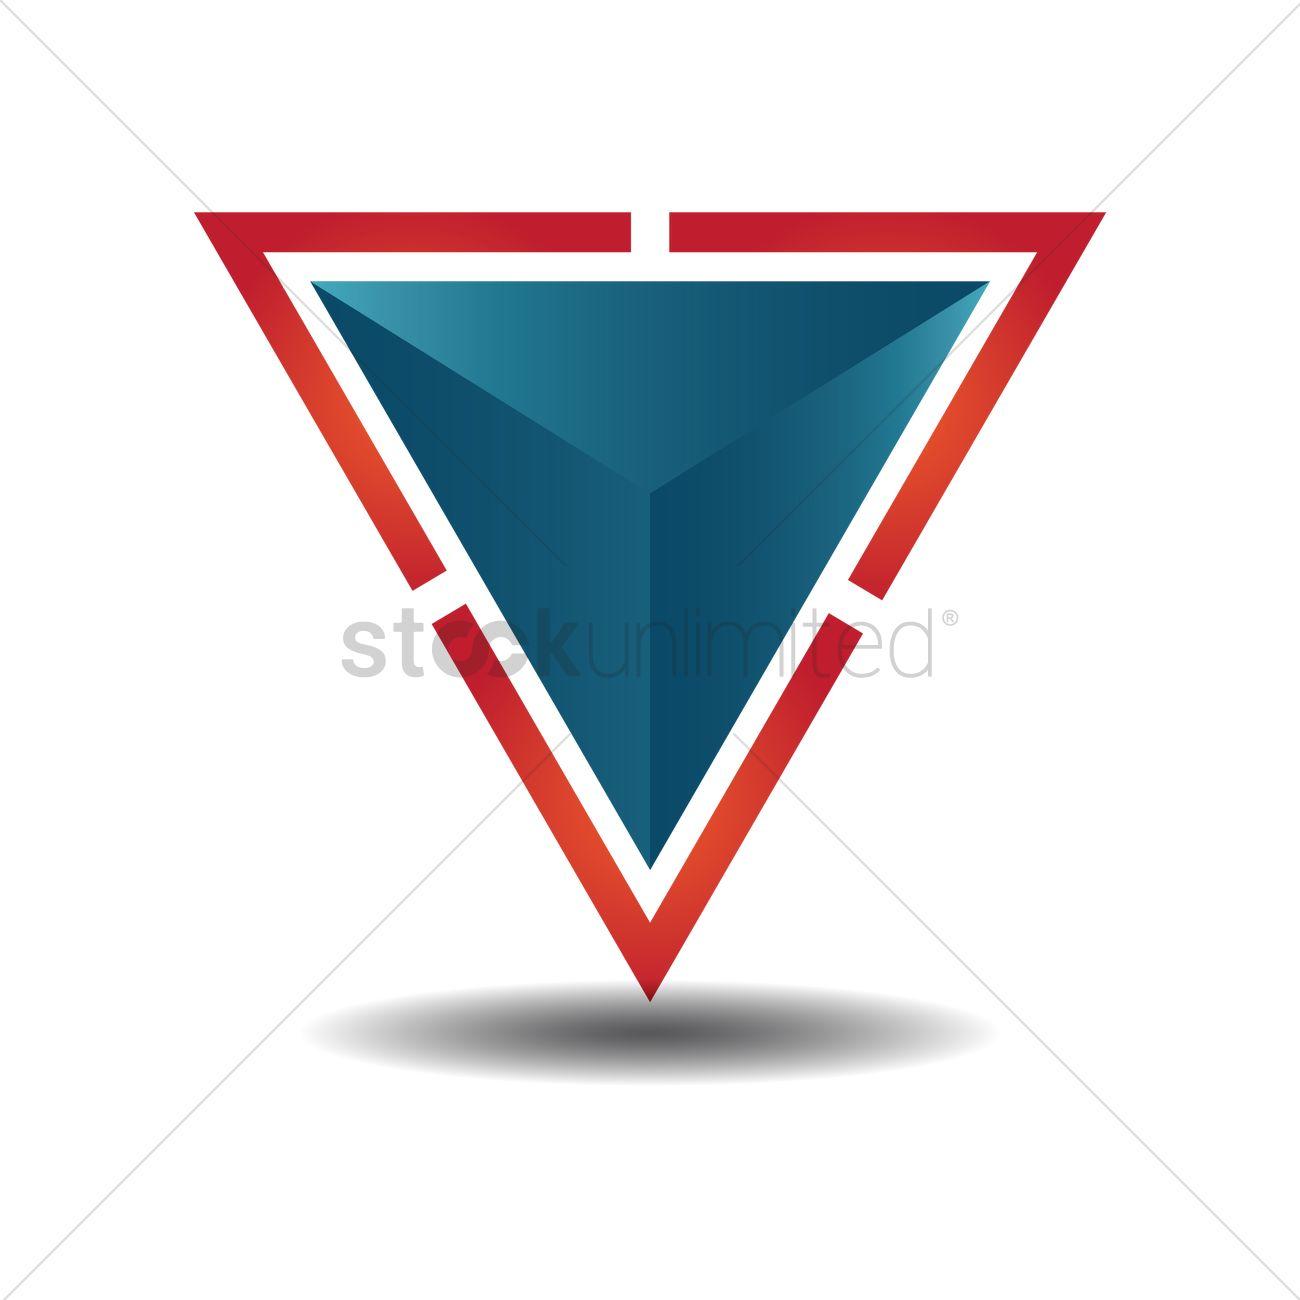 Triangle Logo - Triangle logo element Vector Image - 1939921 | StockUnlimited